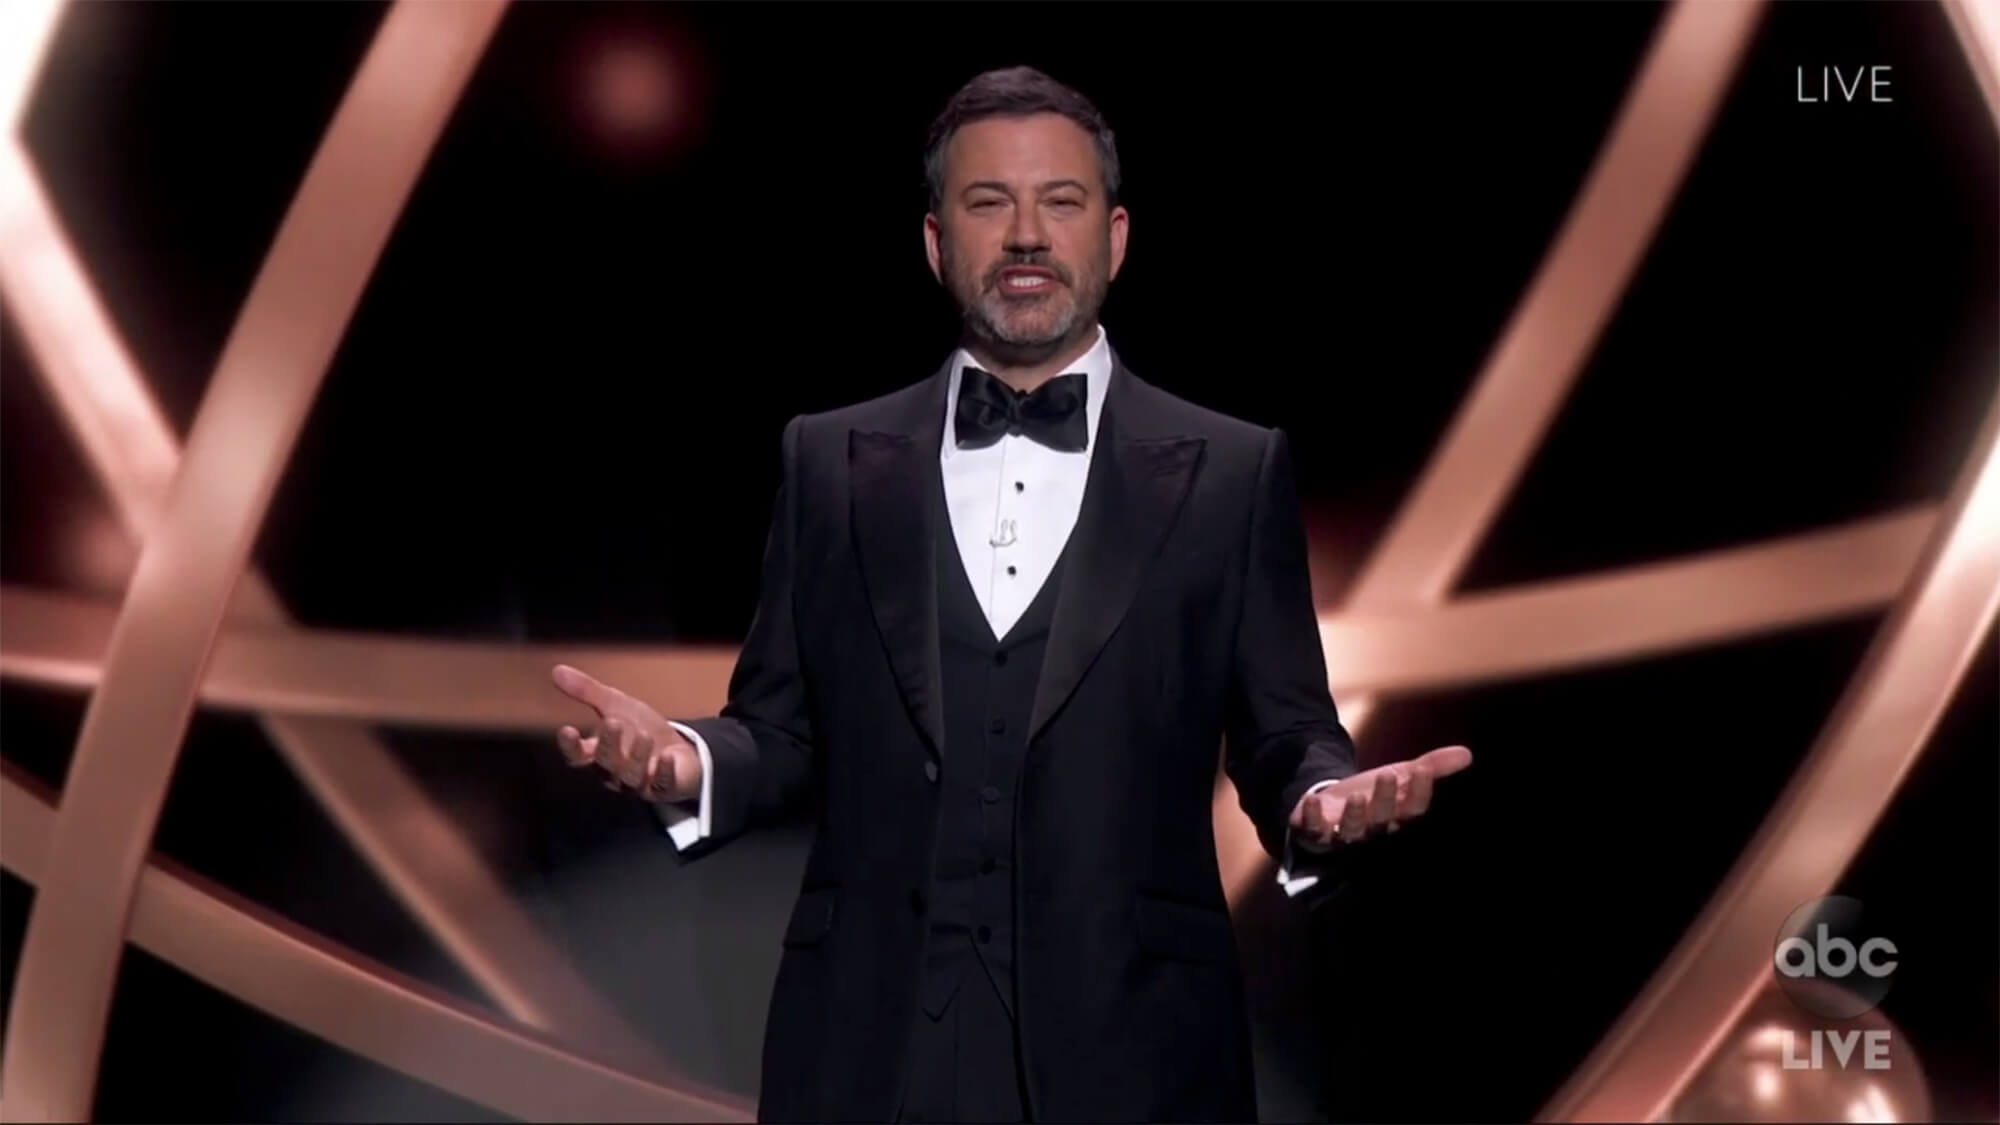 Jimmy Kimmel hosting the Emmys in 2020